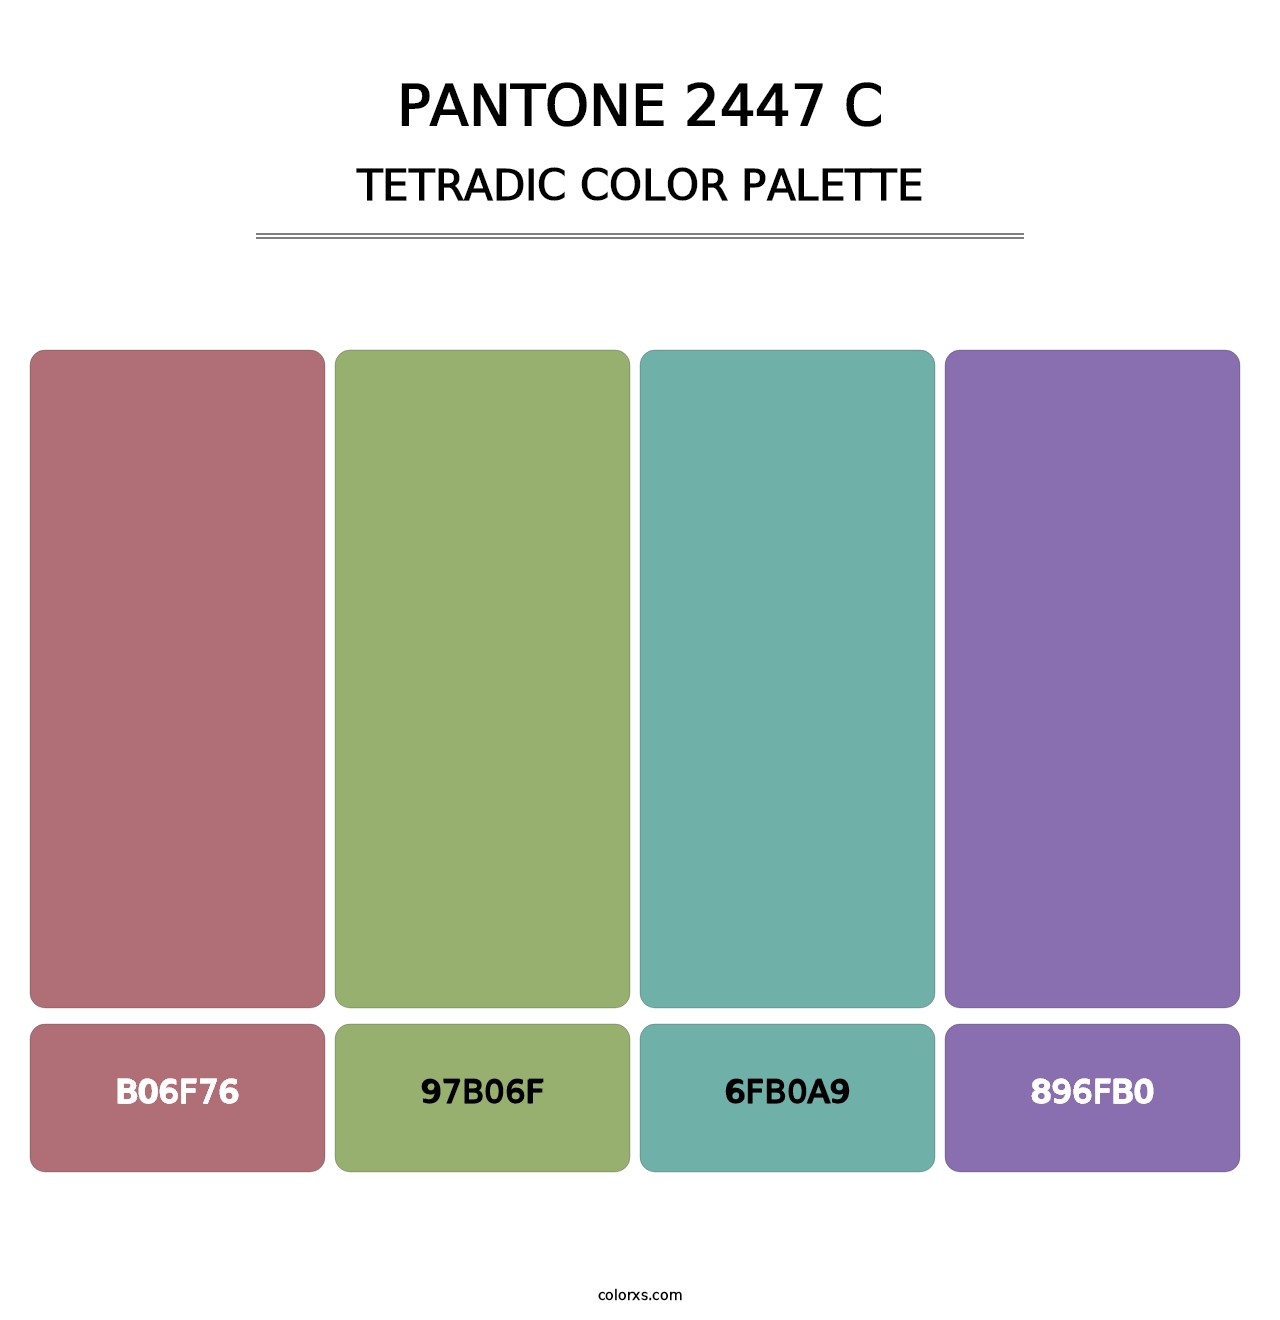 PANTONE 2447 C - Tetradic Color Palette